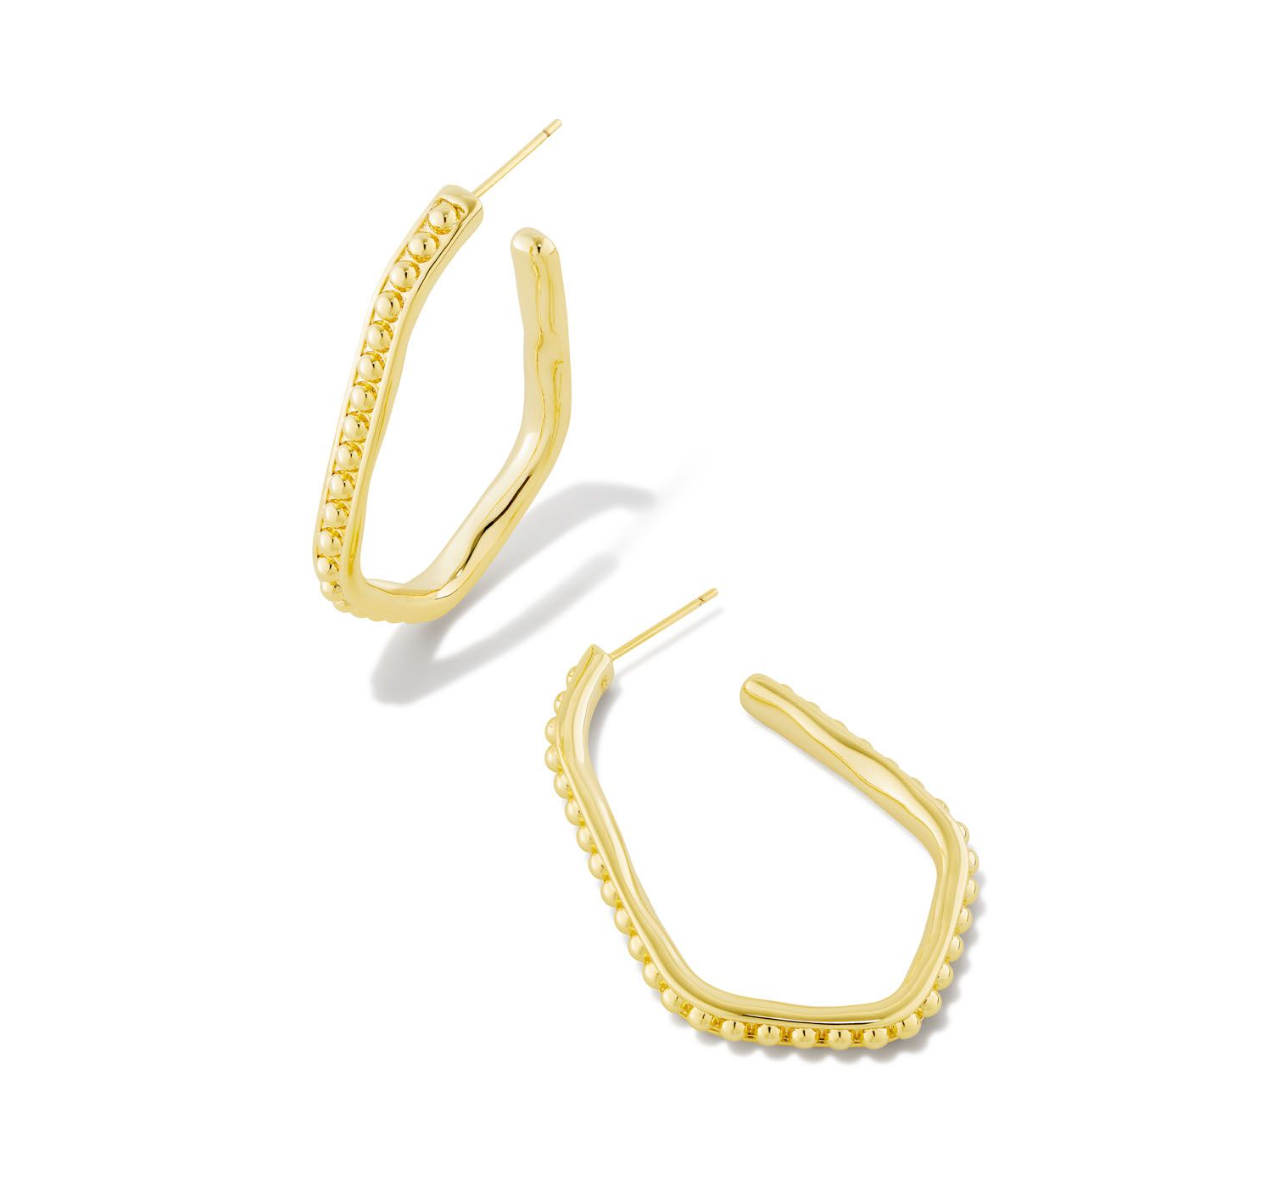 KENDRA SCOTT Lonnie Beaded Hoop Earrings in Gold - The Street Boutique 